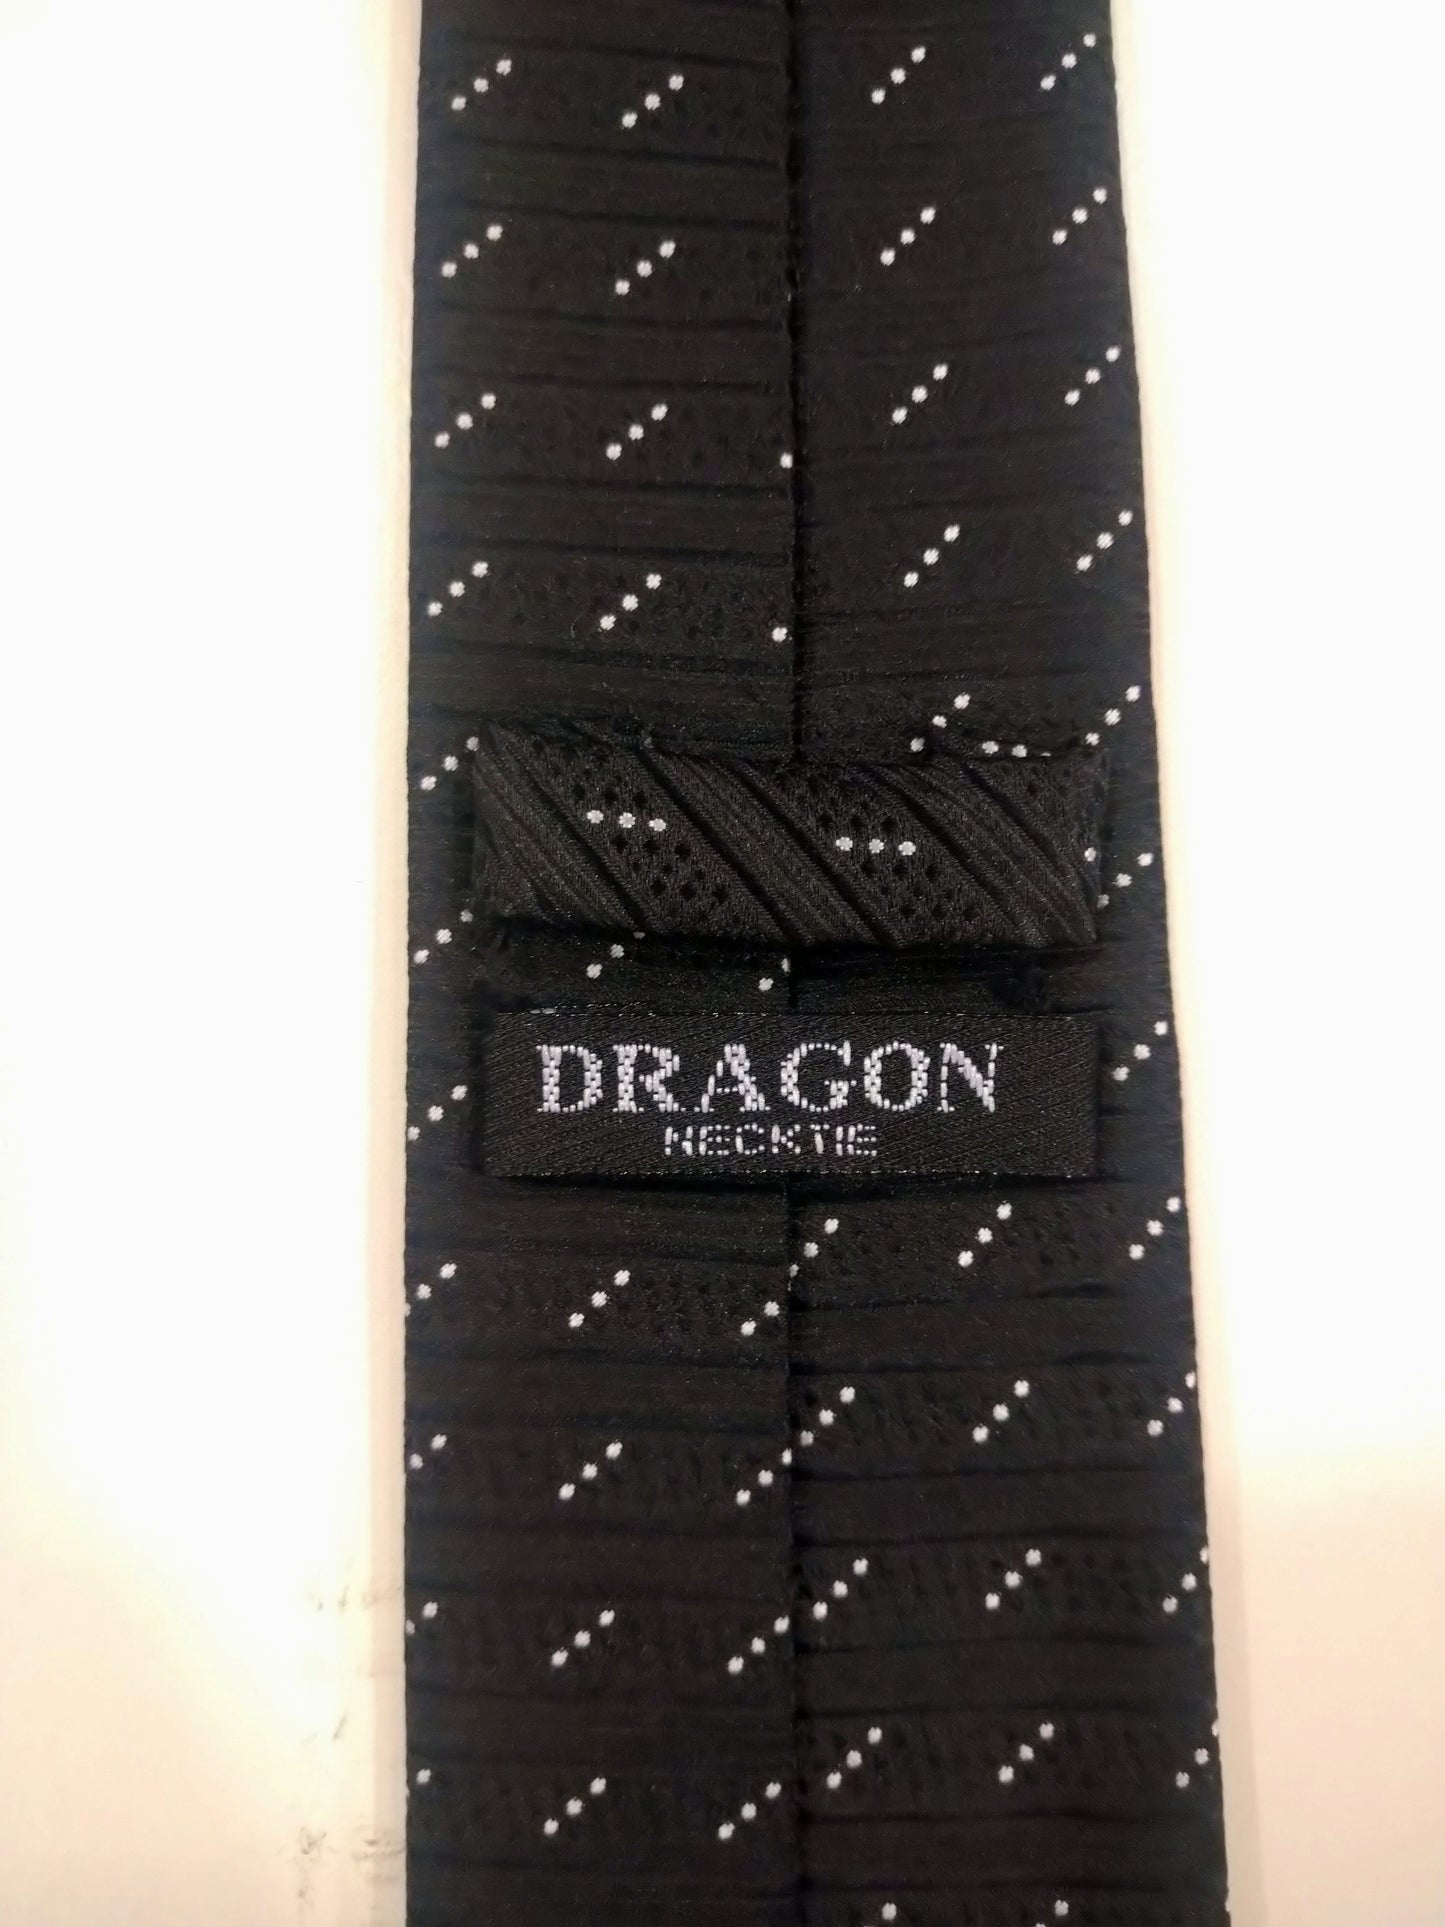 Dragon Polyester Krawatte. Schwarz -weißes materielles Motiv.